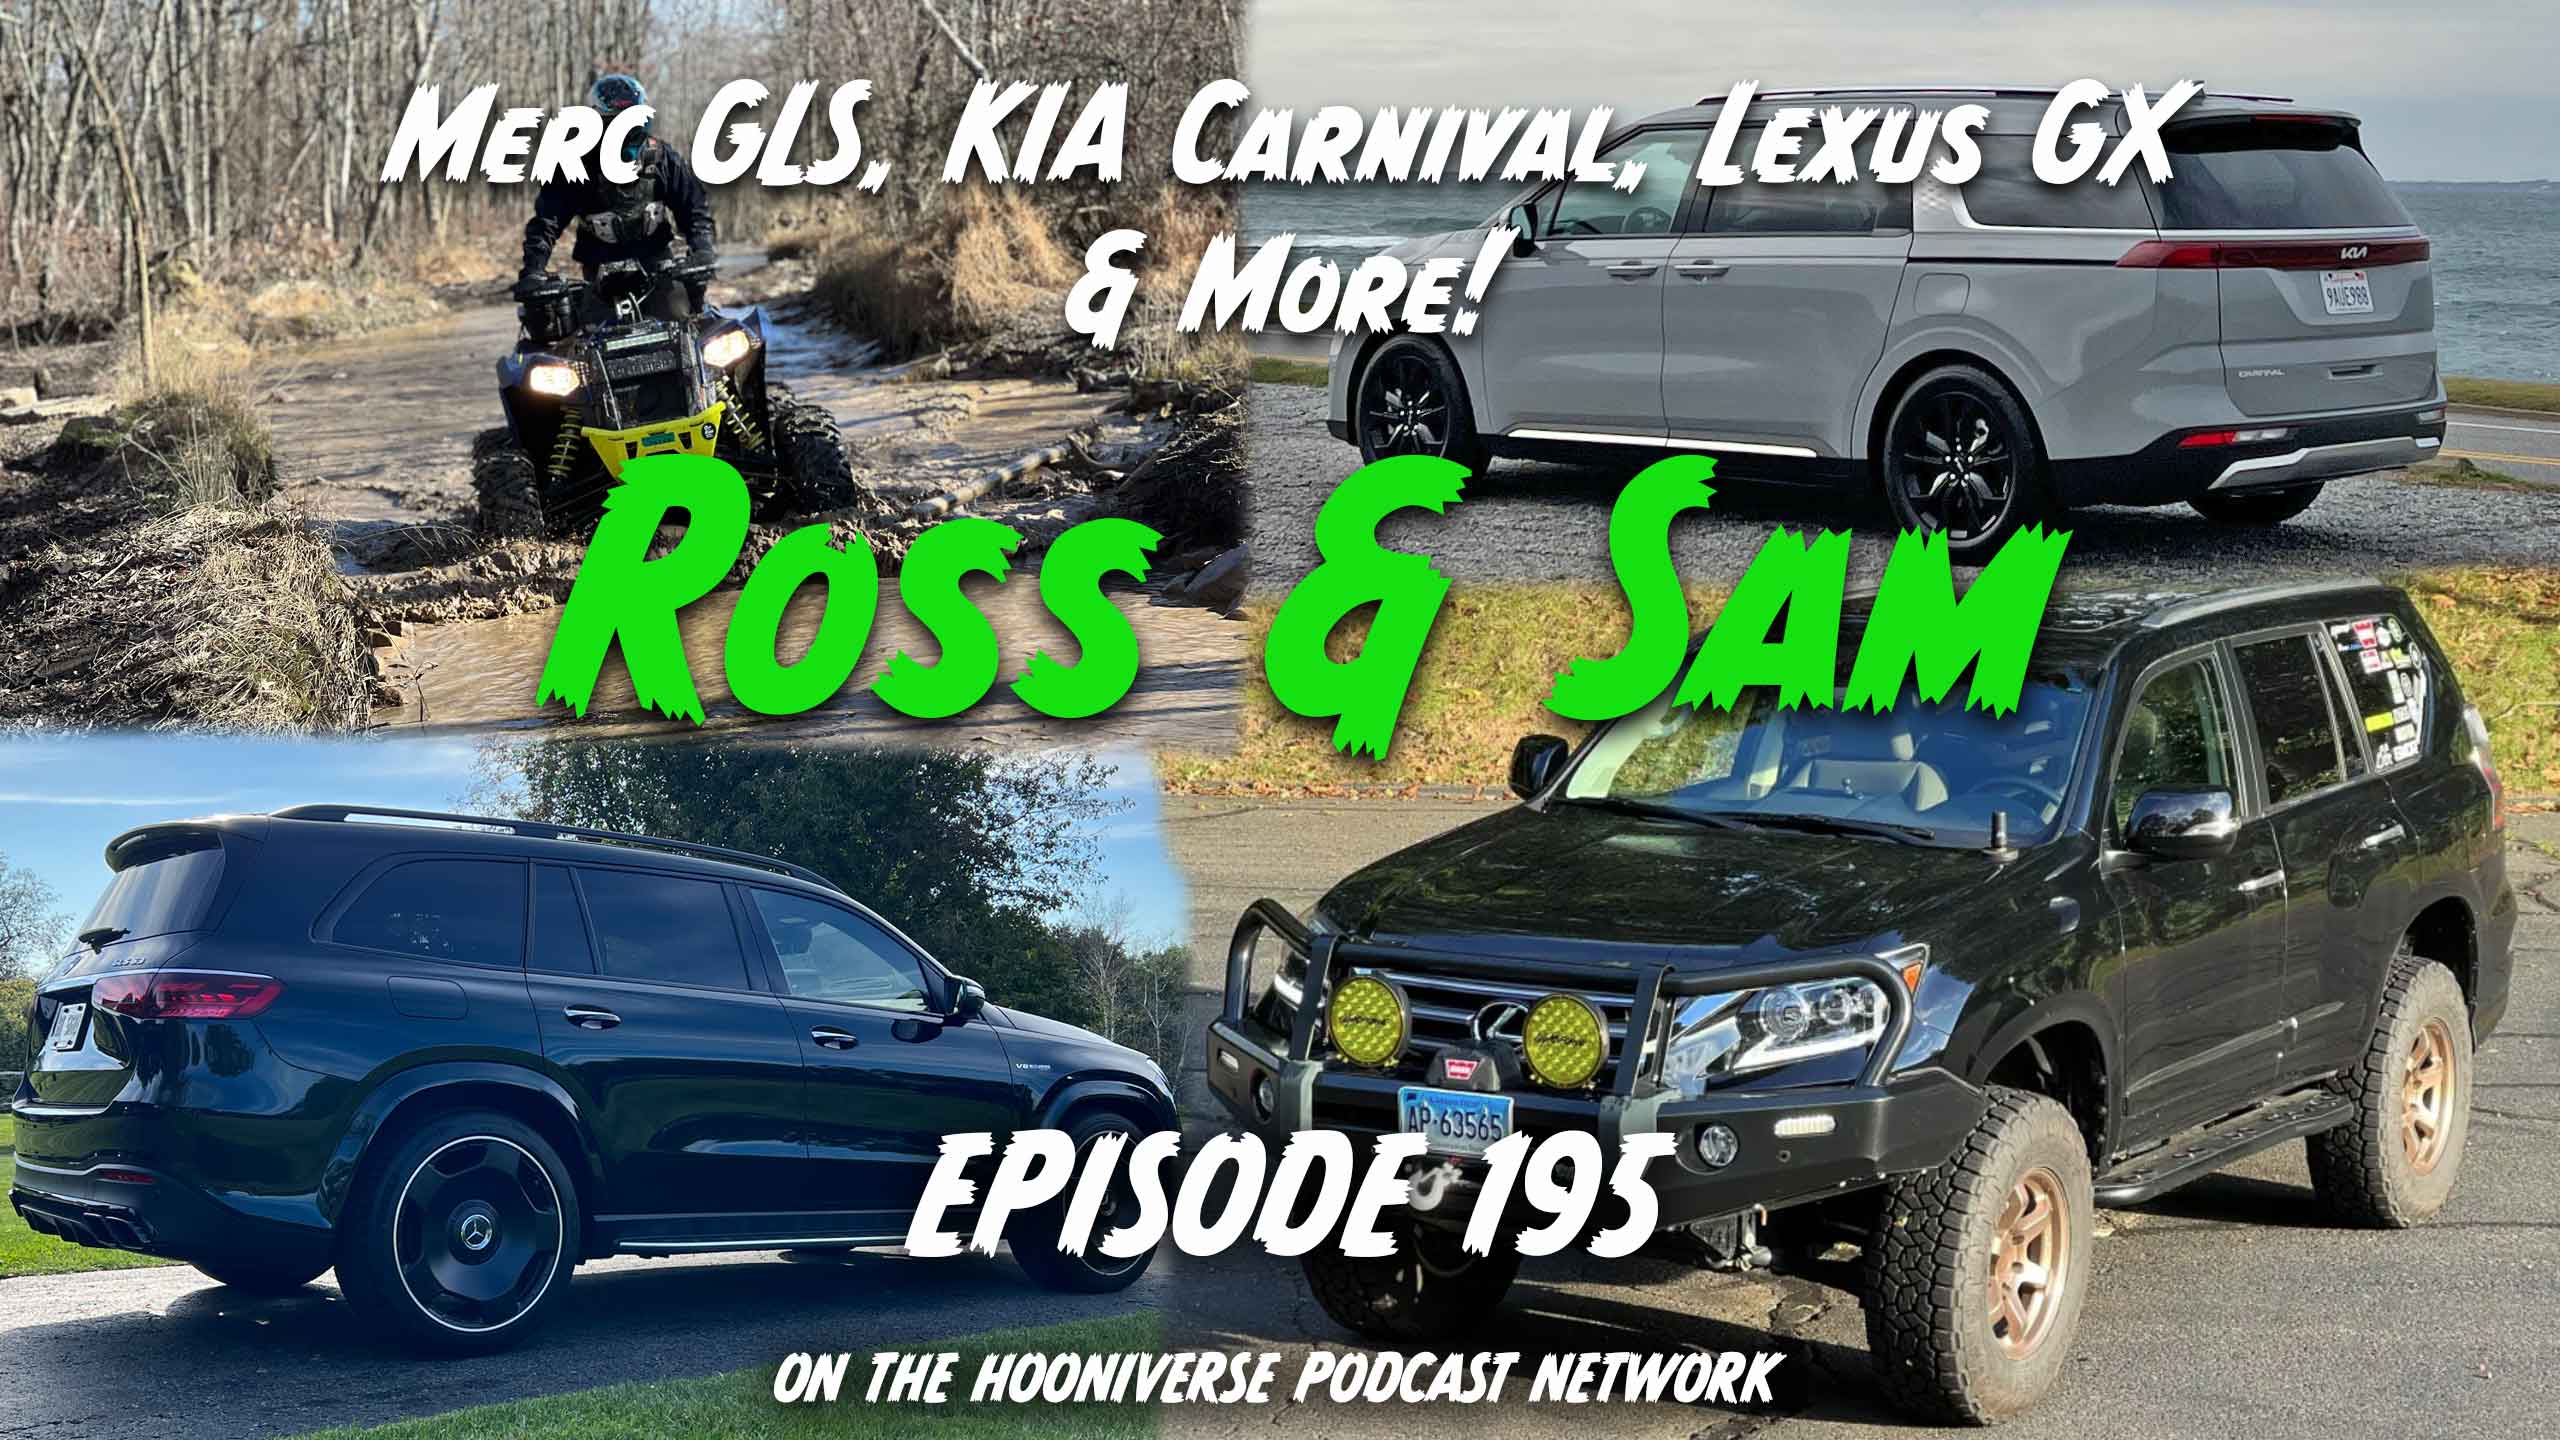 Ross-Sam-Lexus-GX-Mercedes-GLS-Kia-Carnival-Off-The-Road-Again-Podcast-Episode-195